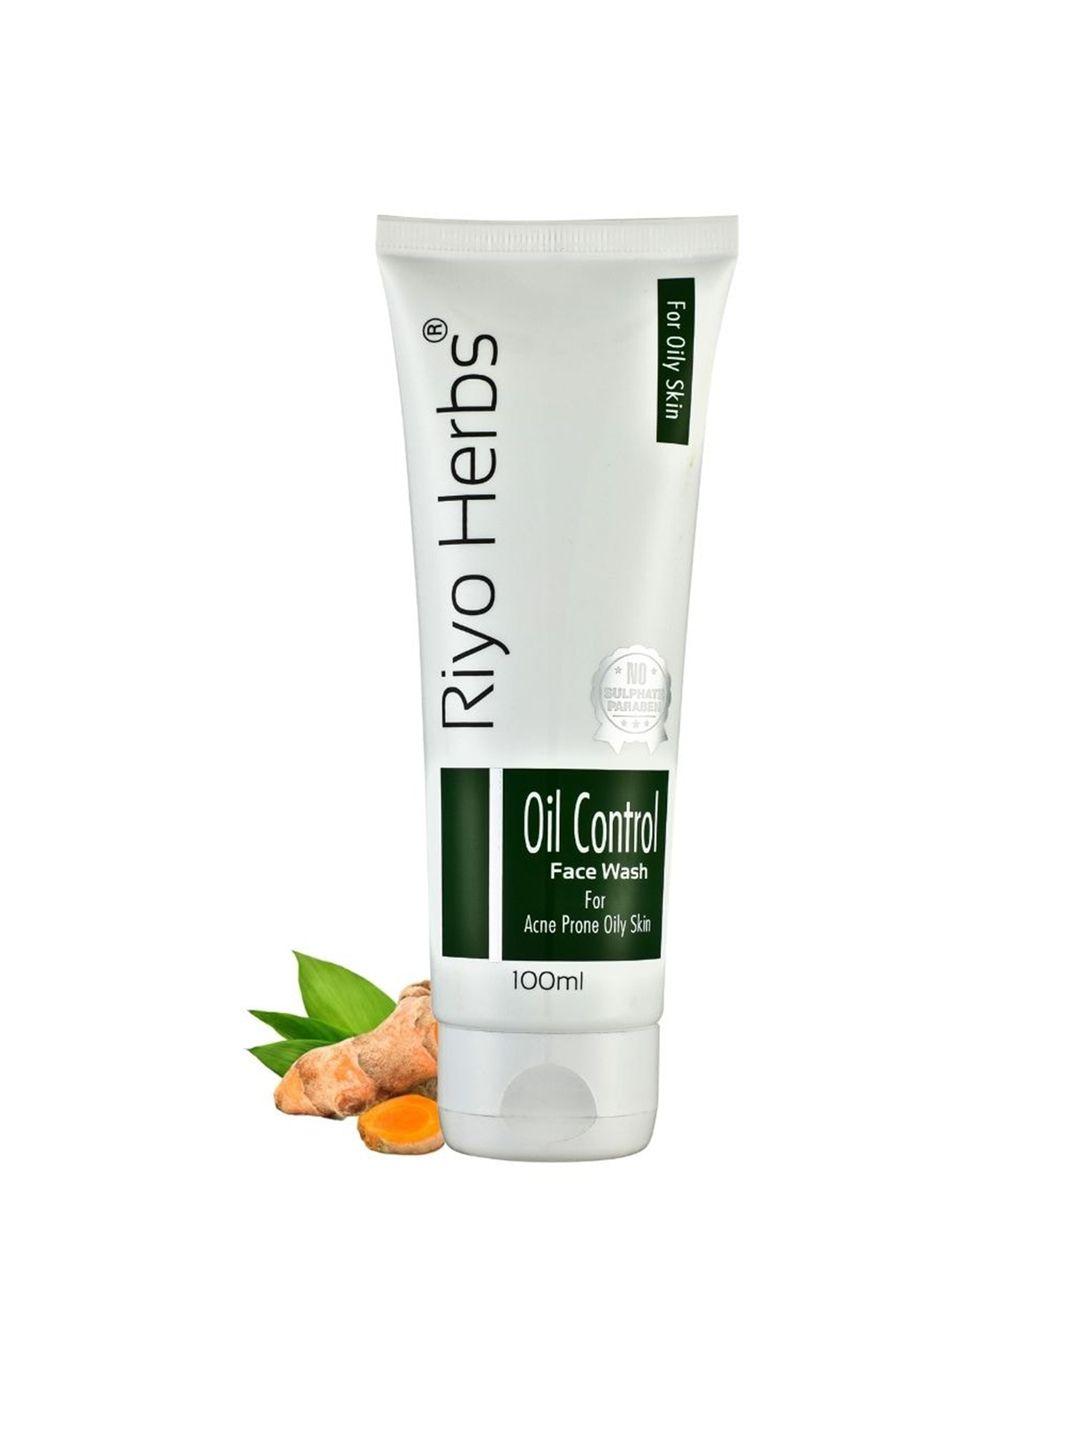 riyo herbs oil control face wash for acne prone oily skin - 100ml